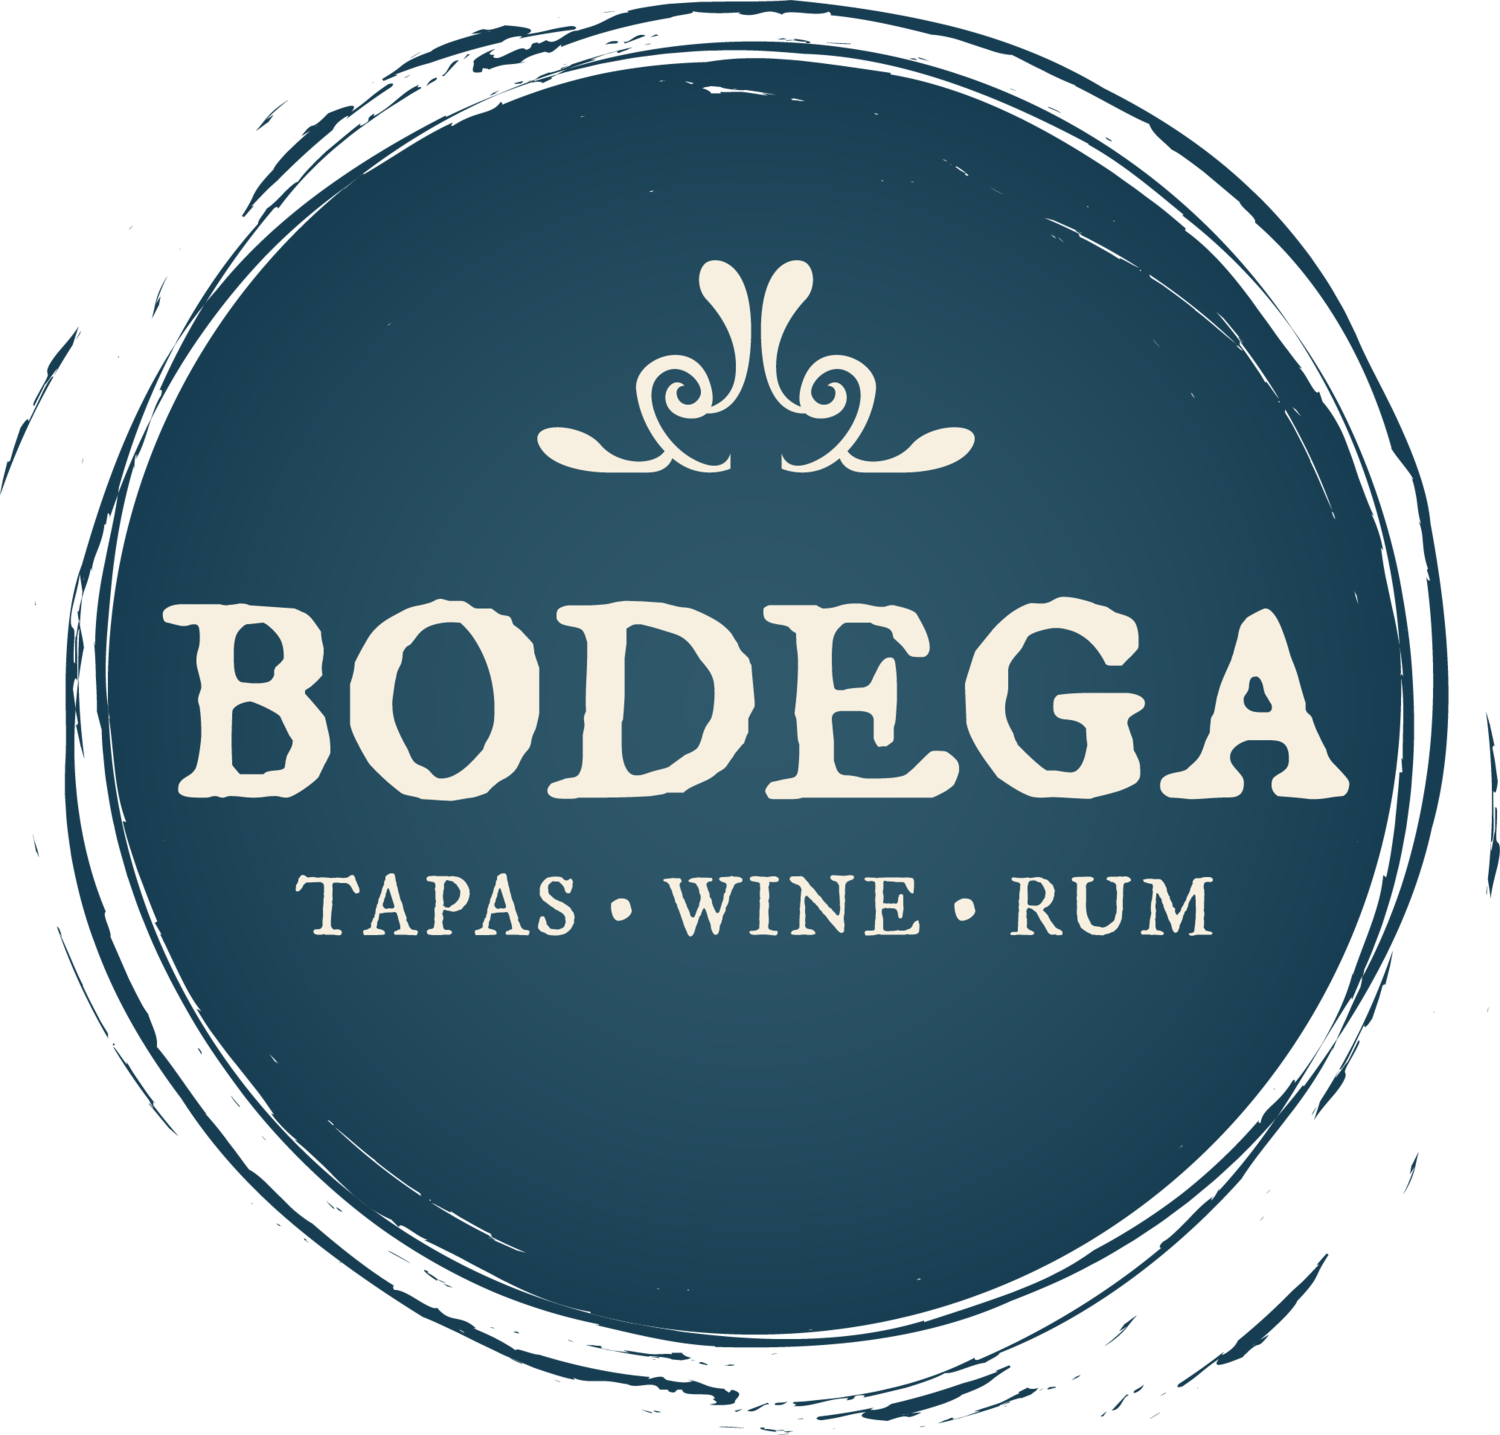 Bodega Tapas, Wine, and Rum